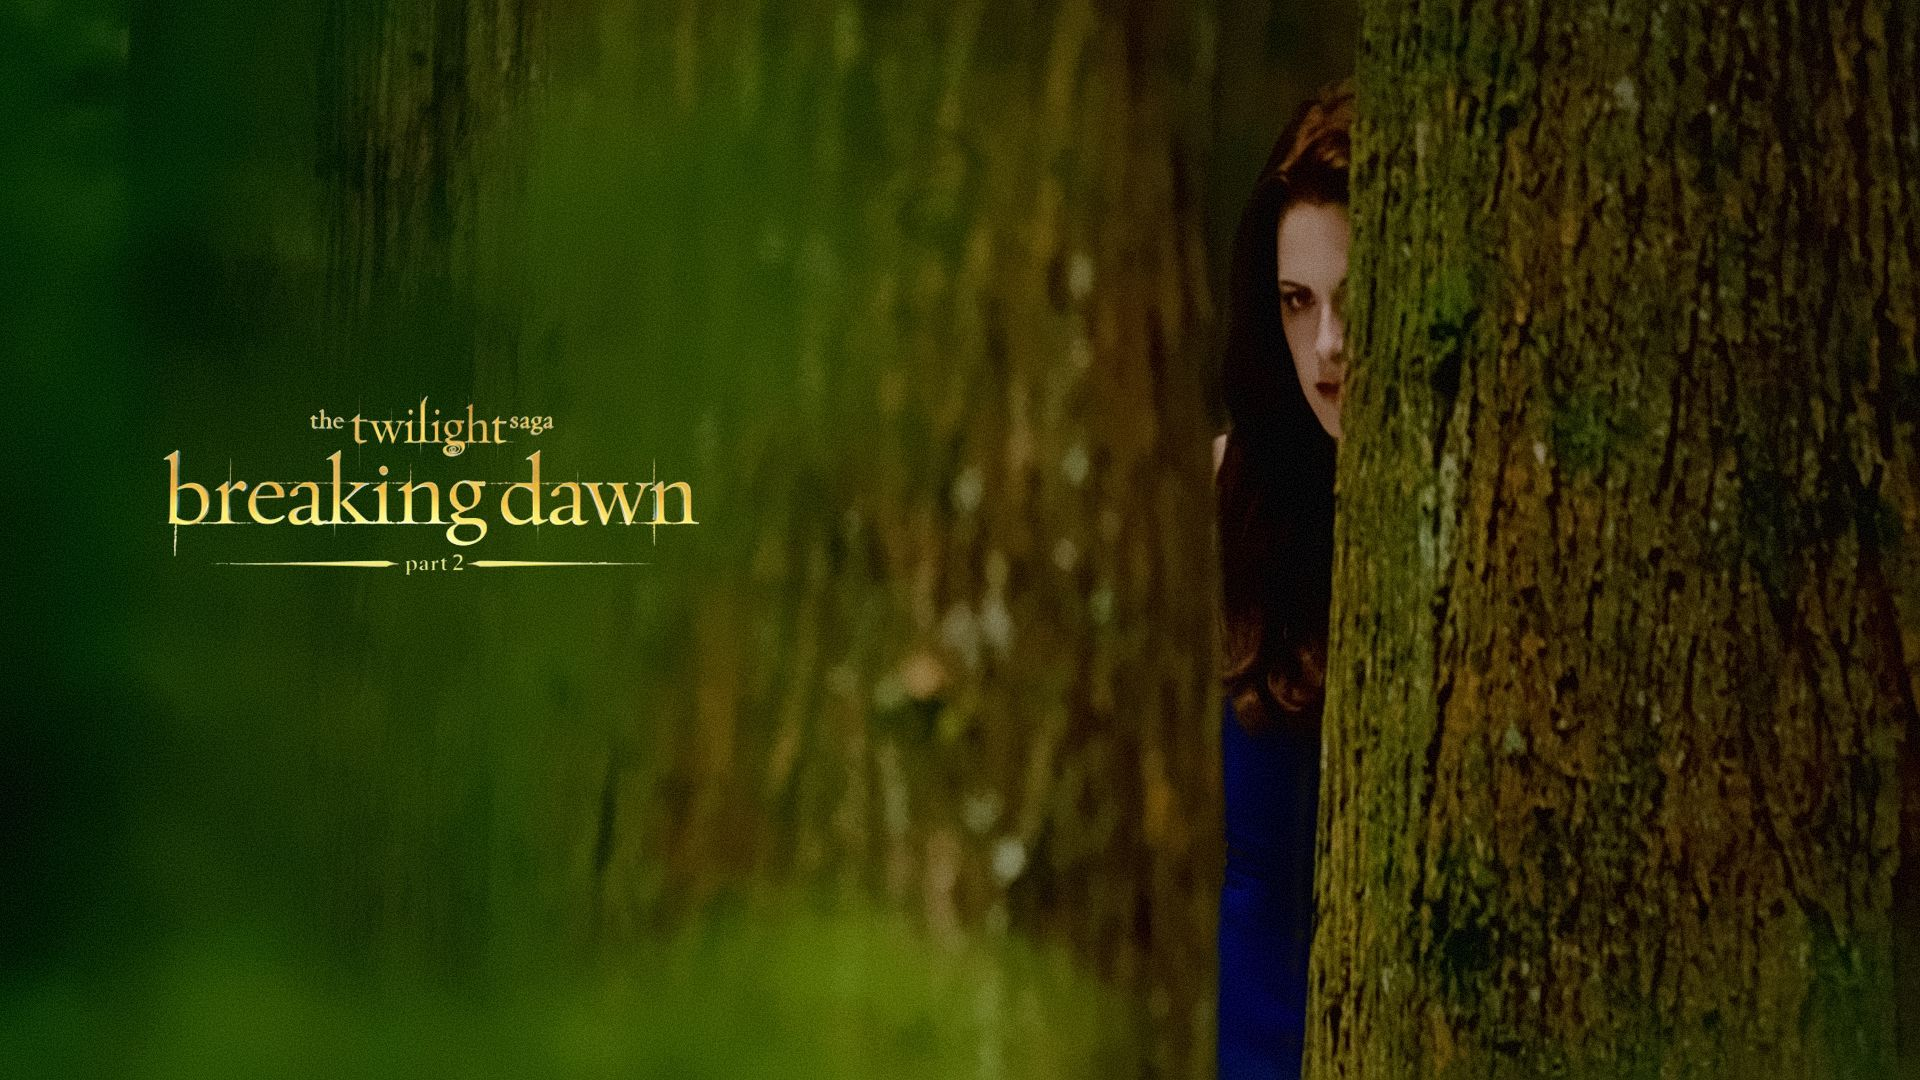 1920x1080 Twilight Series Wallpaper: Breaking Dawn Part 2 wallpapers | Twilight breaking dawn, Breaking dawn, Twilight saga